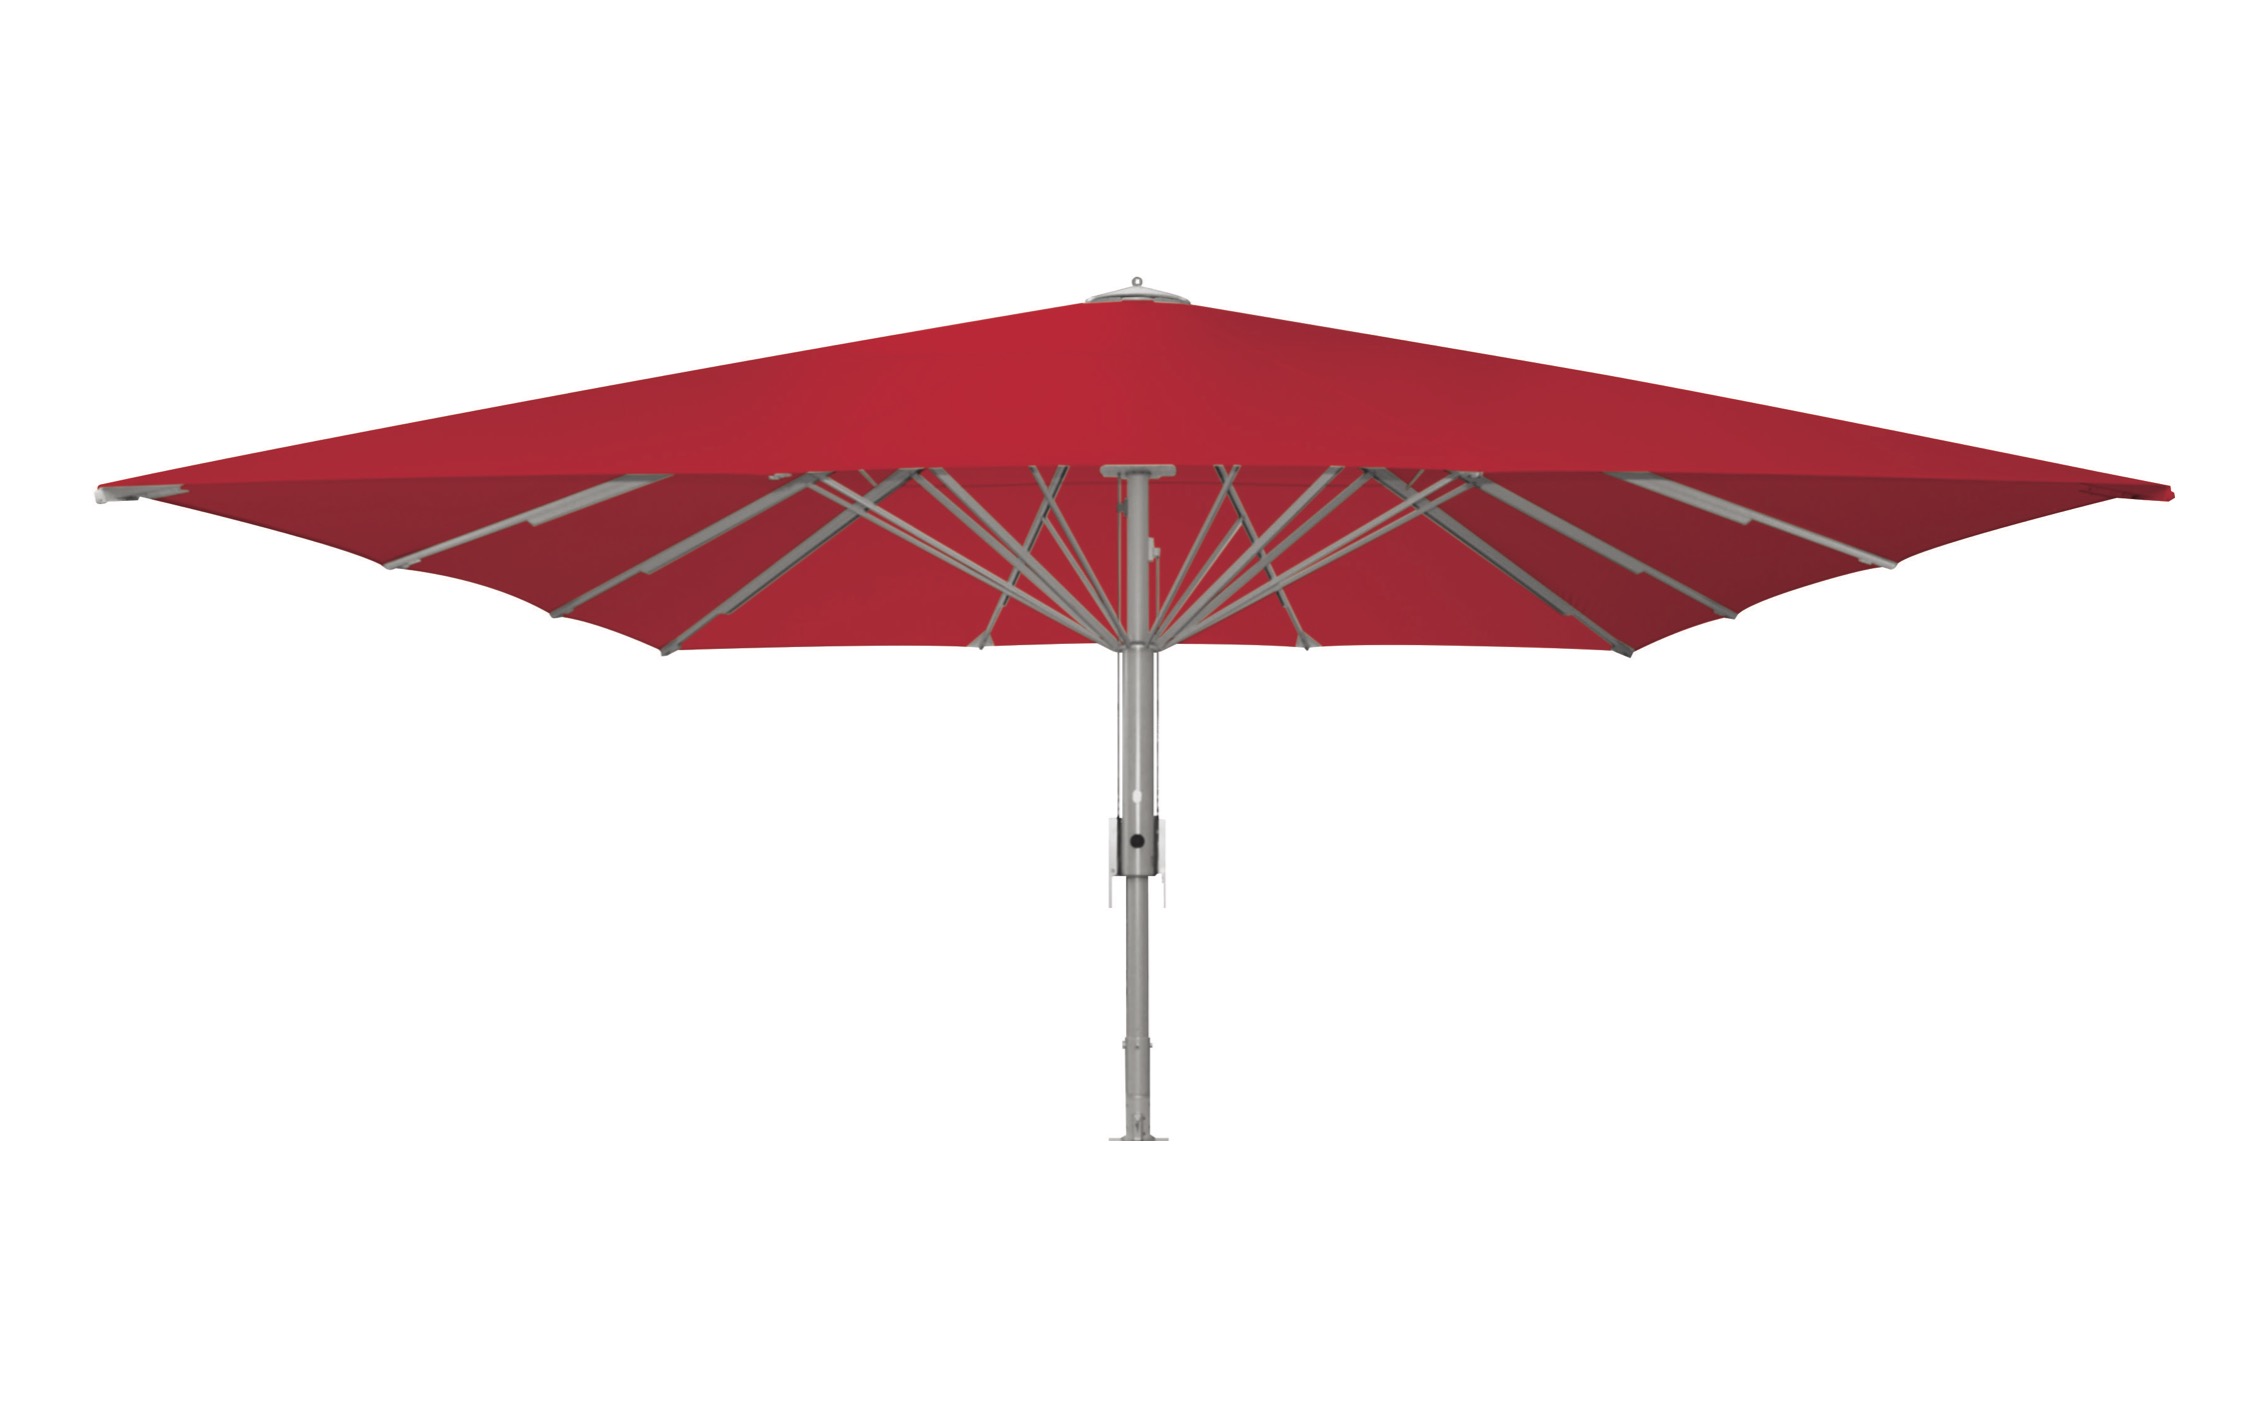 Bahama jumbrella xl Parasoll - restaurang parasoll uteservering, café parasoll uteservering, hotell parasoll uteservering 